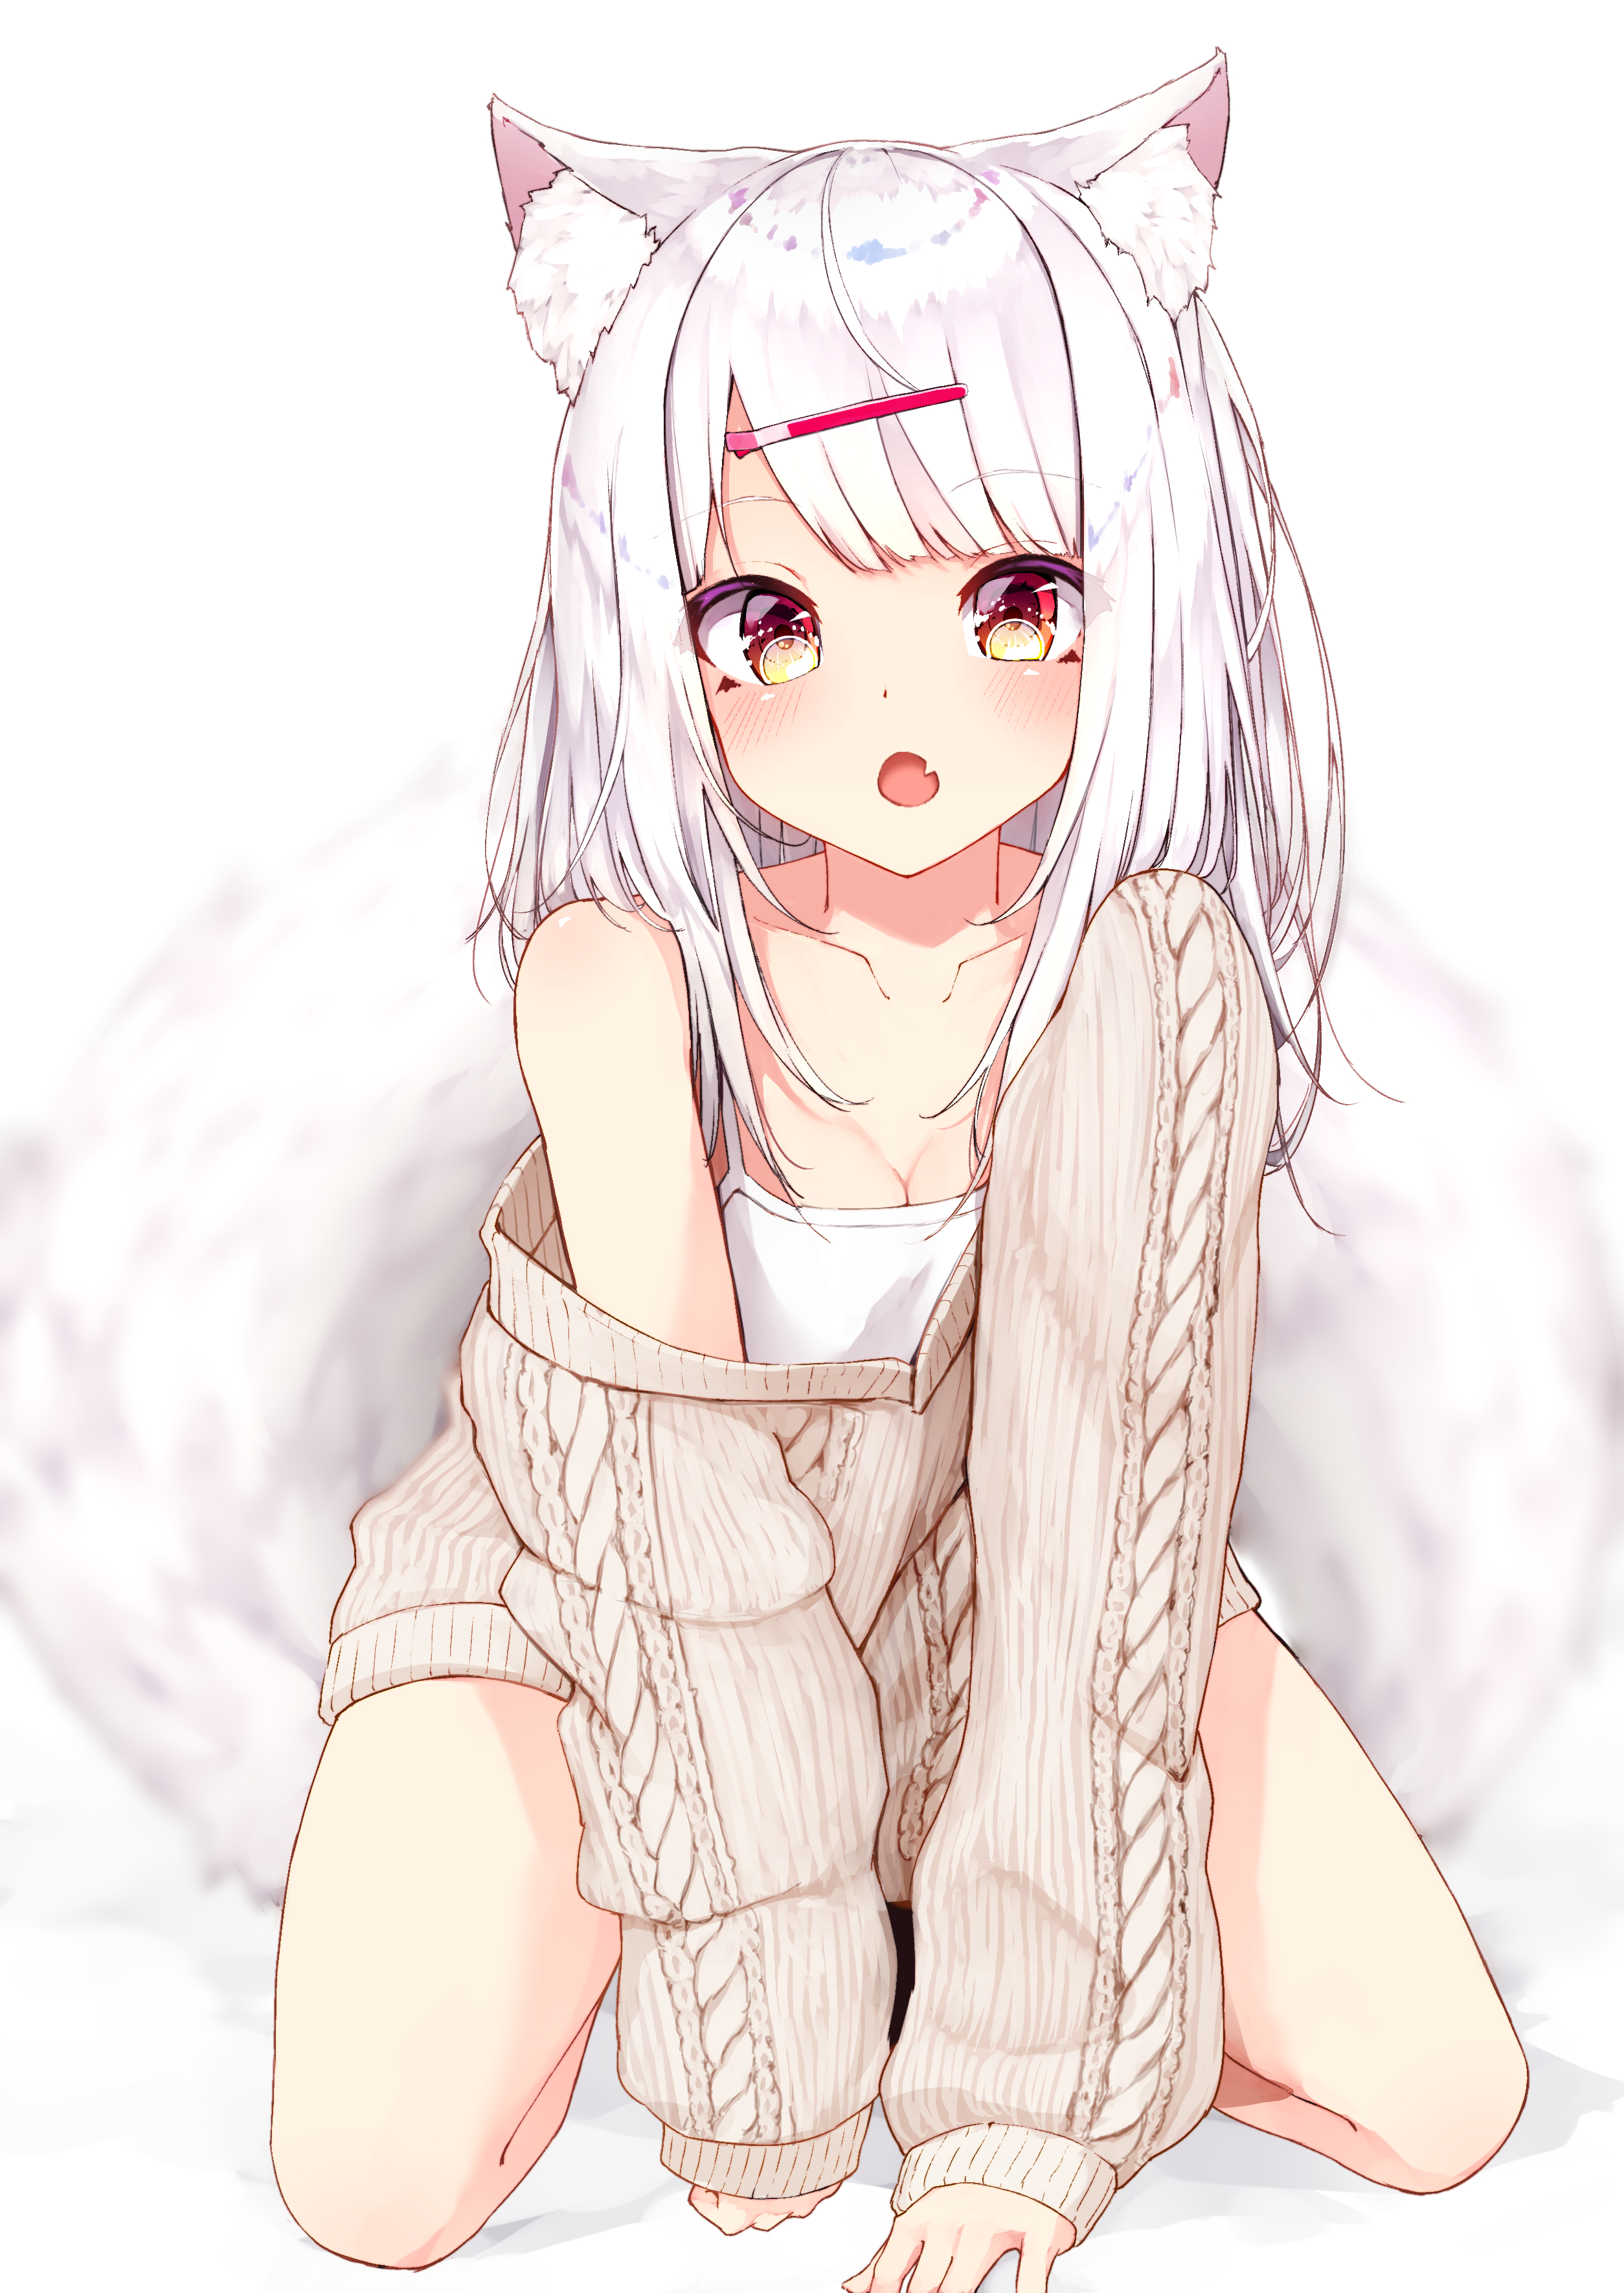 Anime 2508x3541 anime anime girls digital art artwork 2D portrait display red eyes white hair animal ears tail fox girl sweater kneeling Mayogii